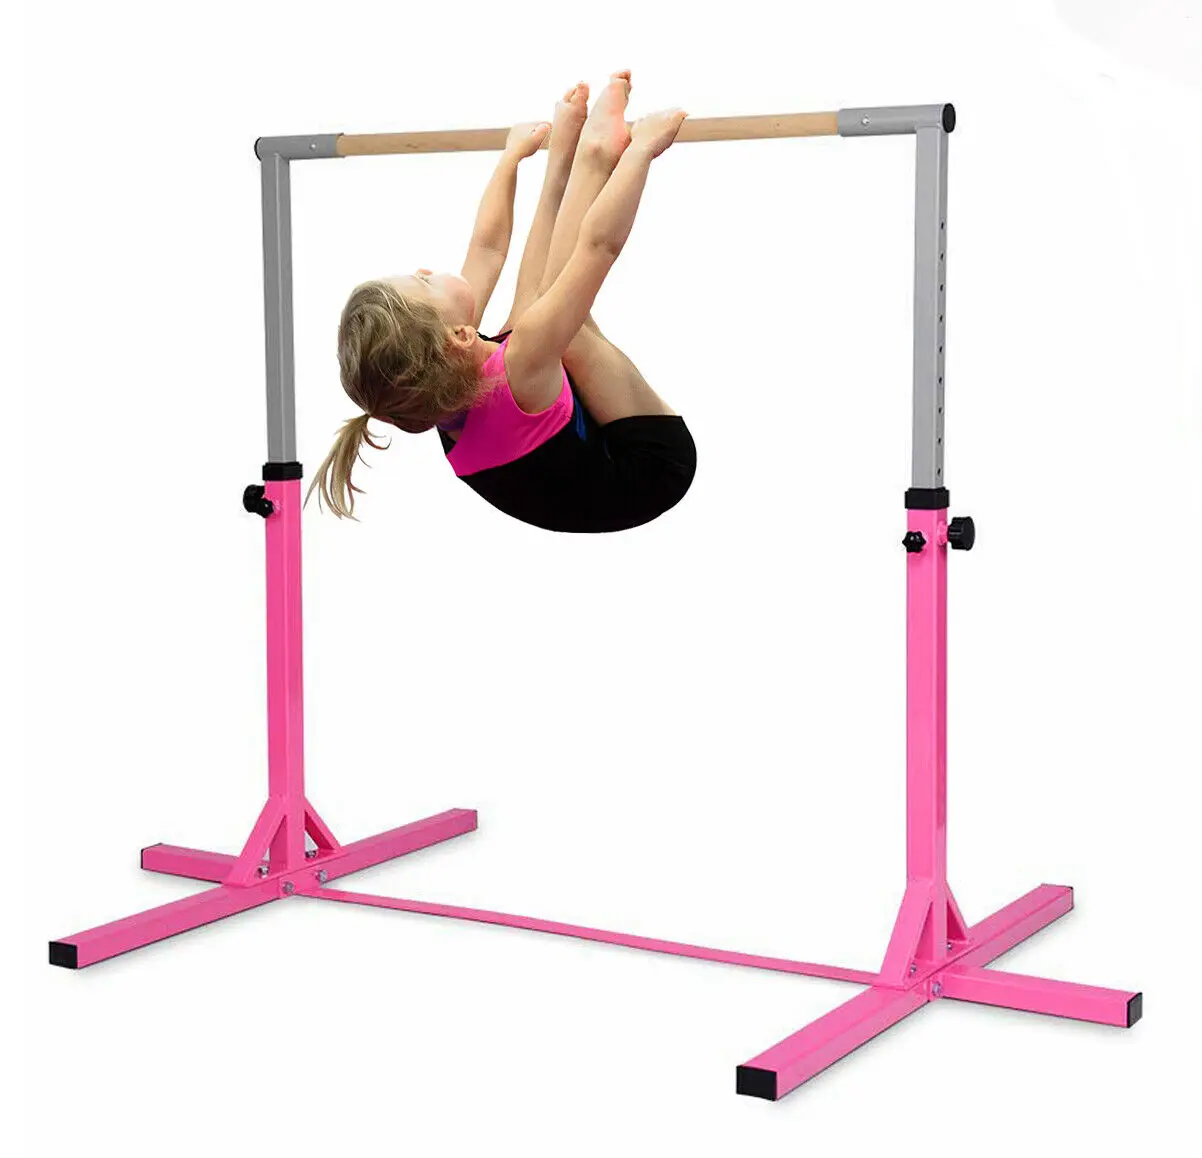 

130cm Adjustable For Kids Exercise Gymnastic Bar Horizontal Sports Gym Training kids kip horizontal bar, Any